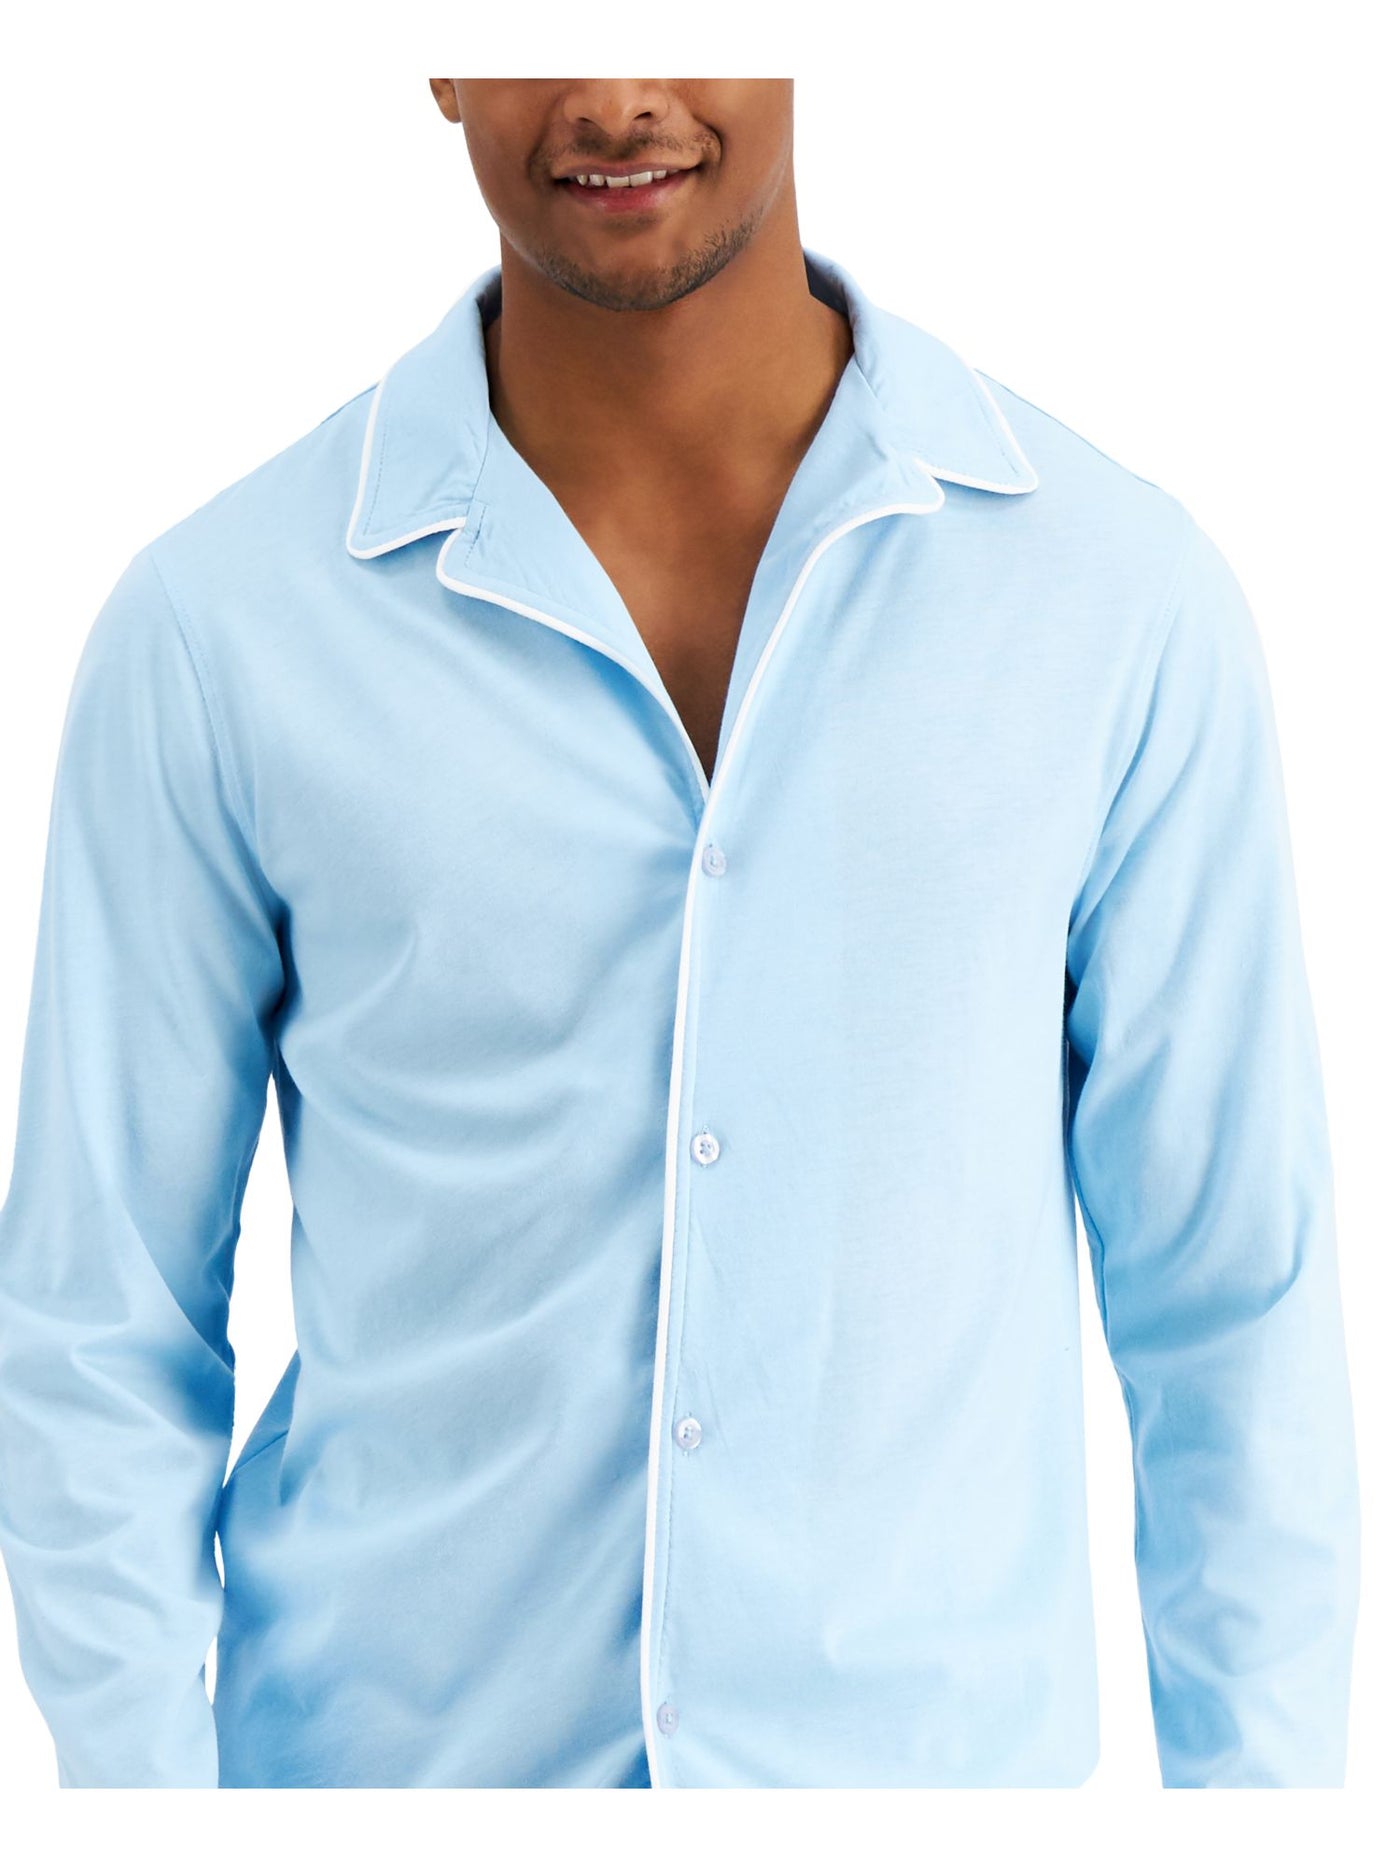 CLUBROOM Intimates Light Blue Notched Collar Sleep Shirt Pajama Top XXL